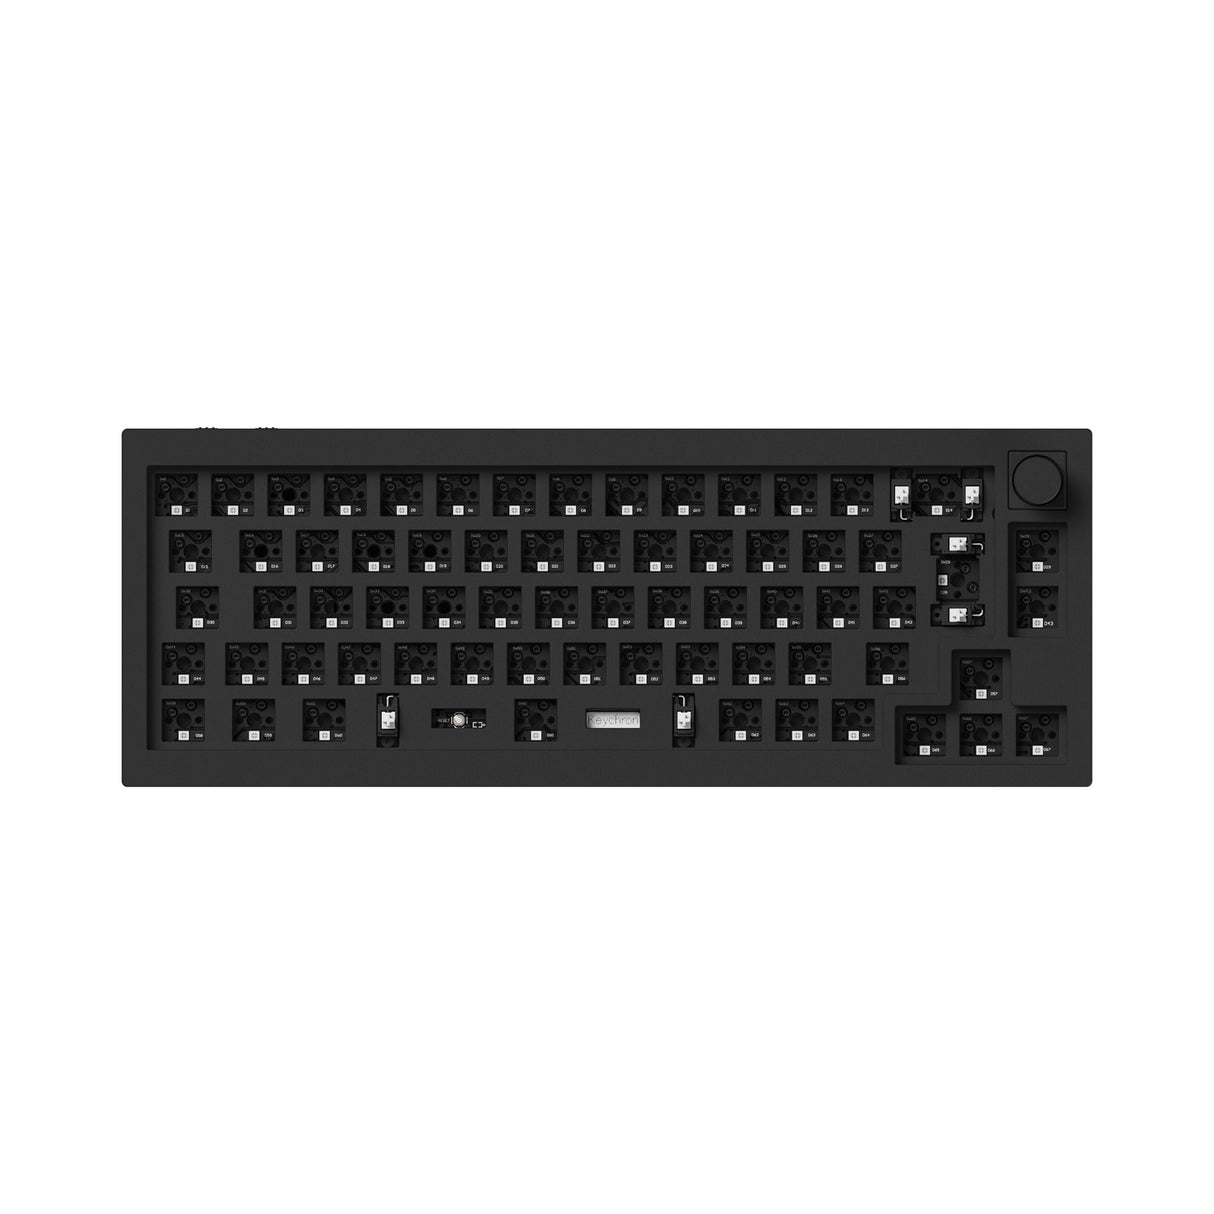 Keychron Q2 Pro QMK/VIA wireless custom mechanical keyboard 65 percent layout full aluminum black frame for Mac WIndows Linux with RGB backlight and hot-swappable barebone knob ISO